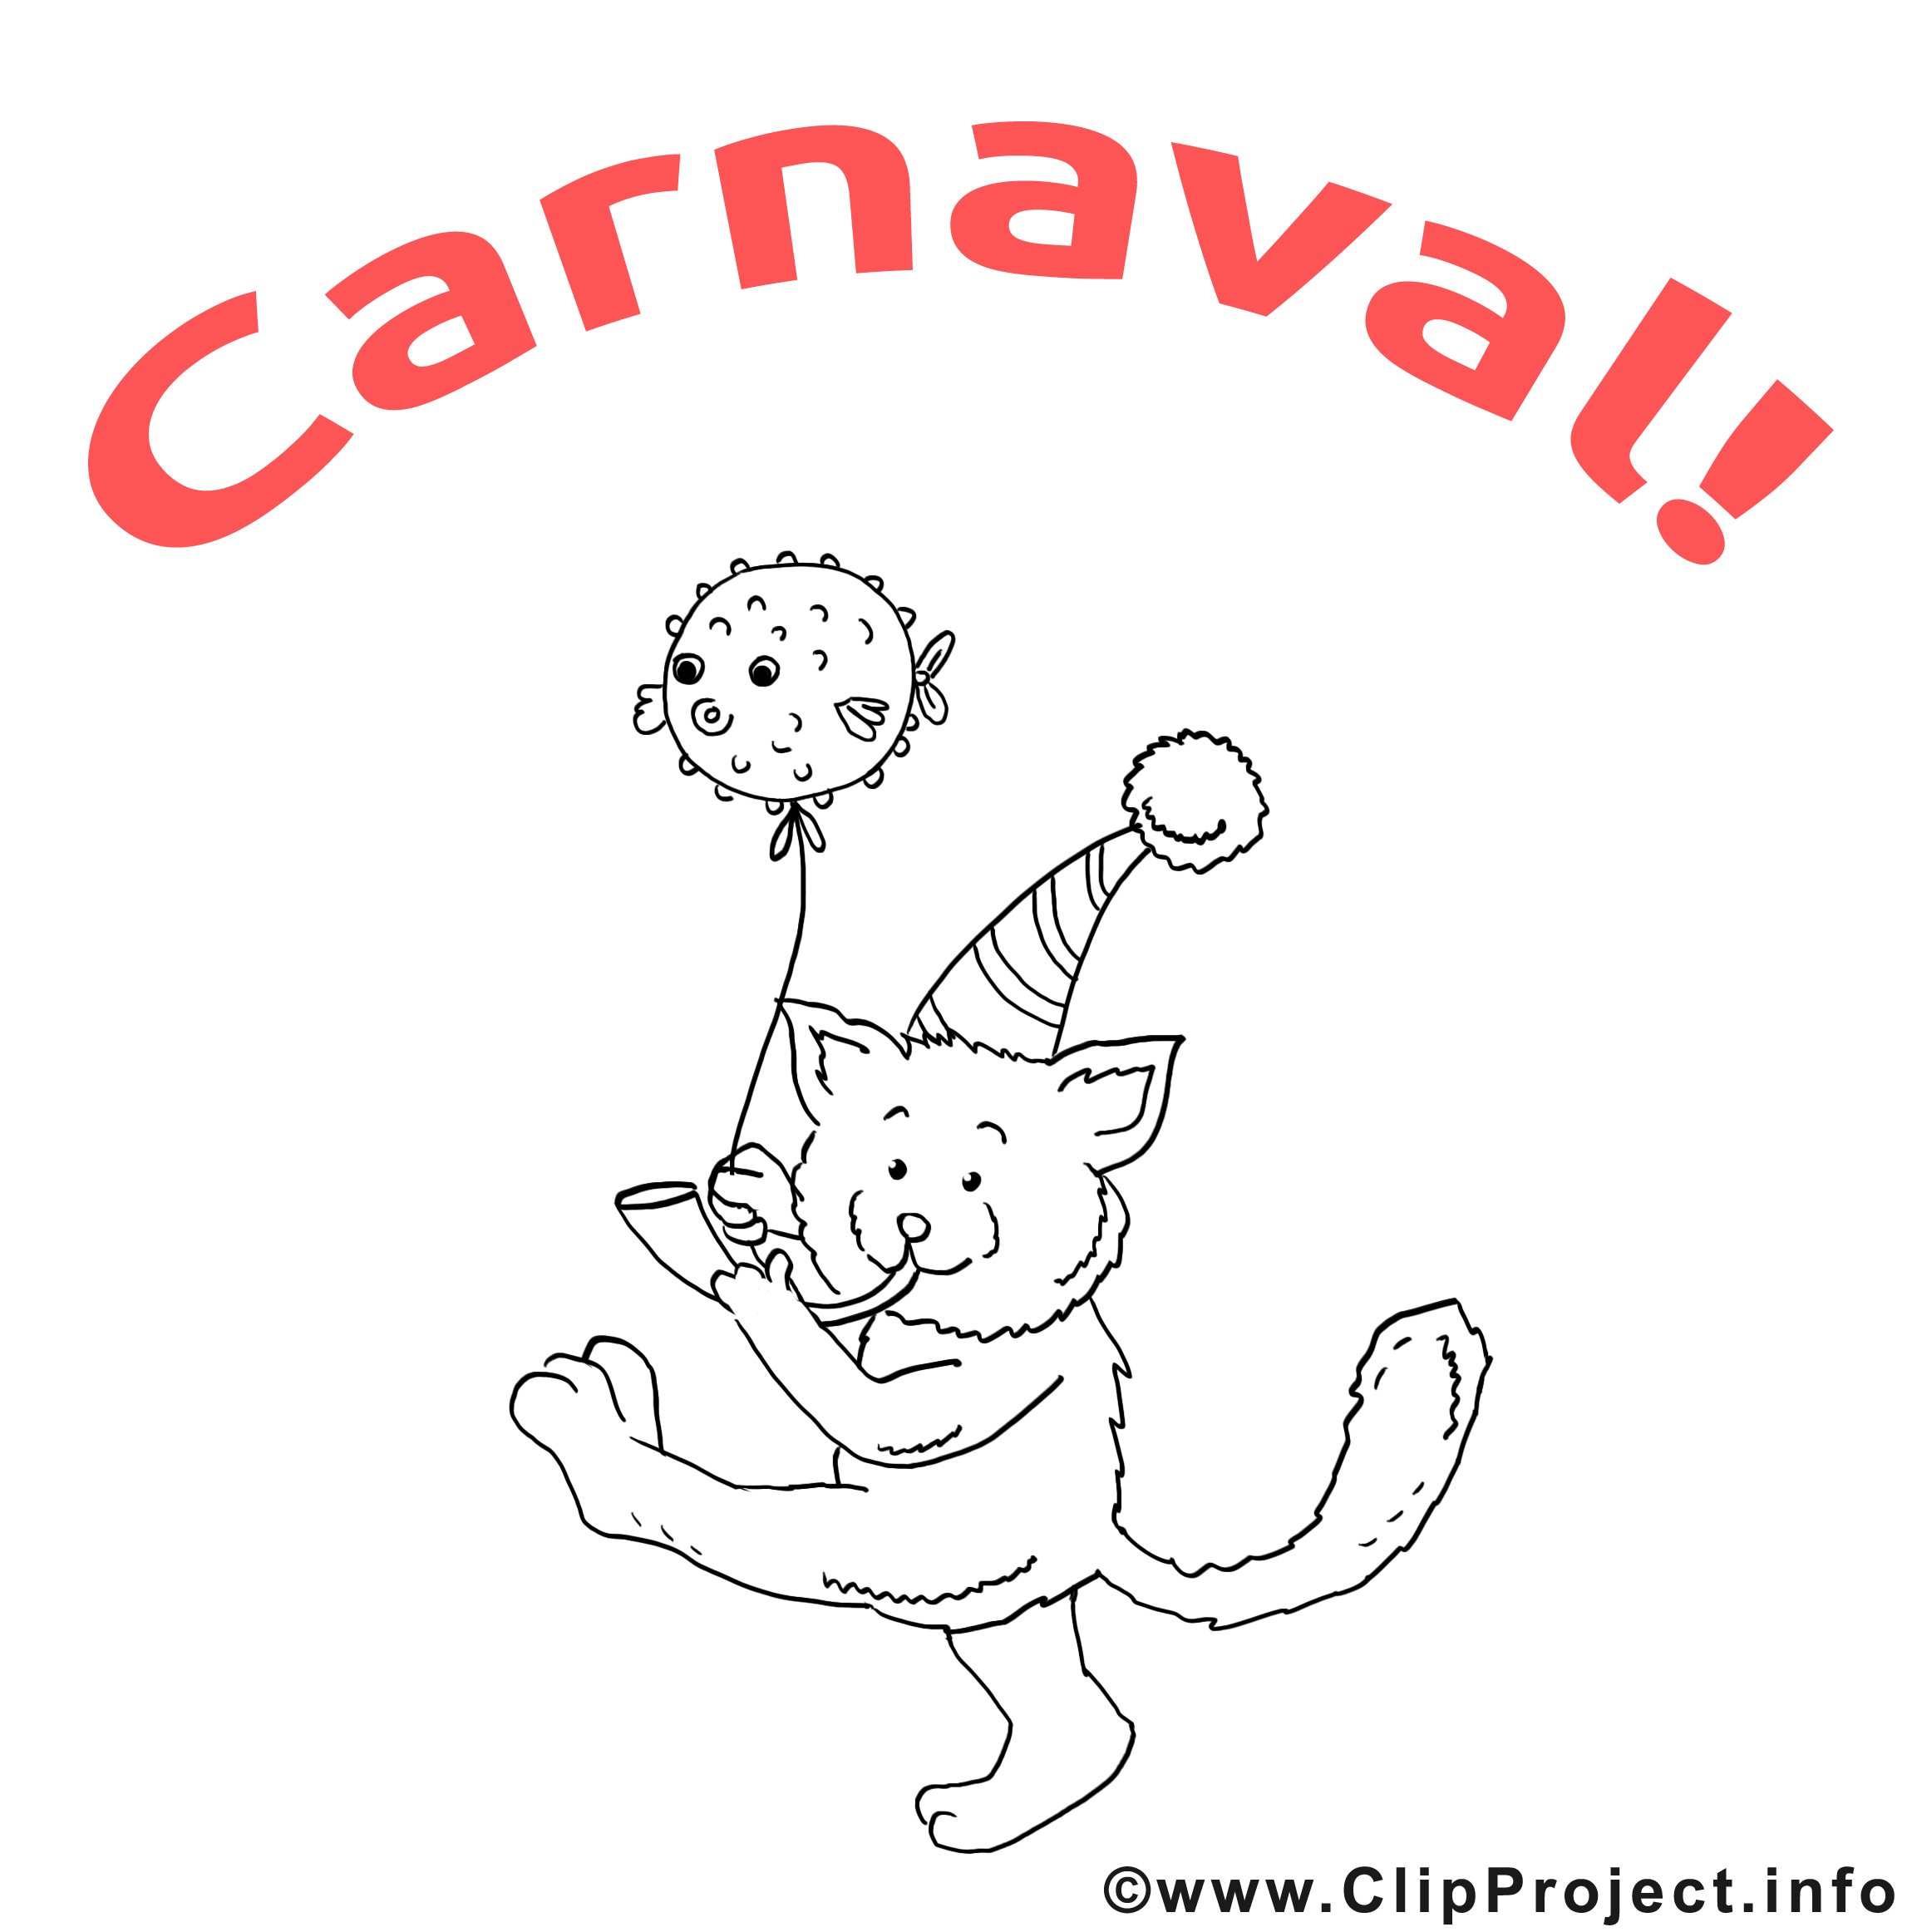 Chat clip art à imprimer – Carnaval images